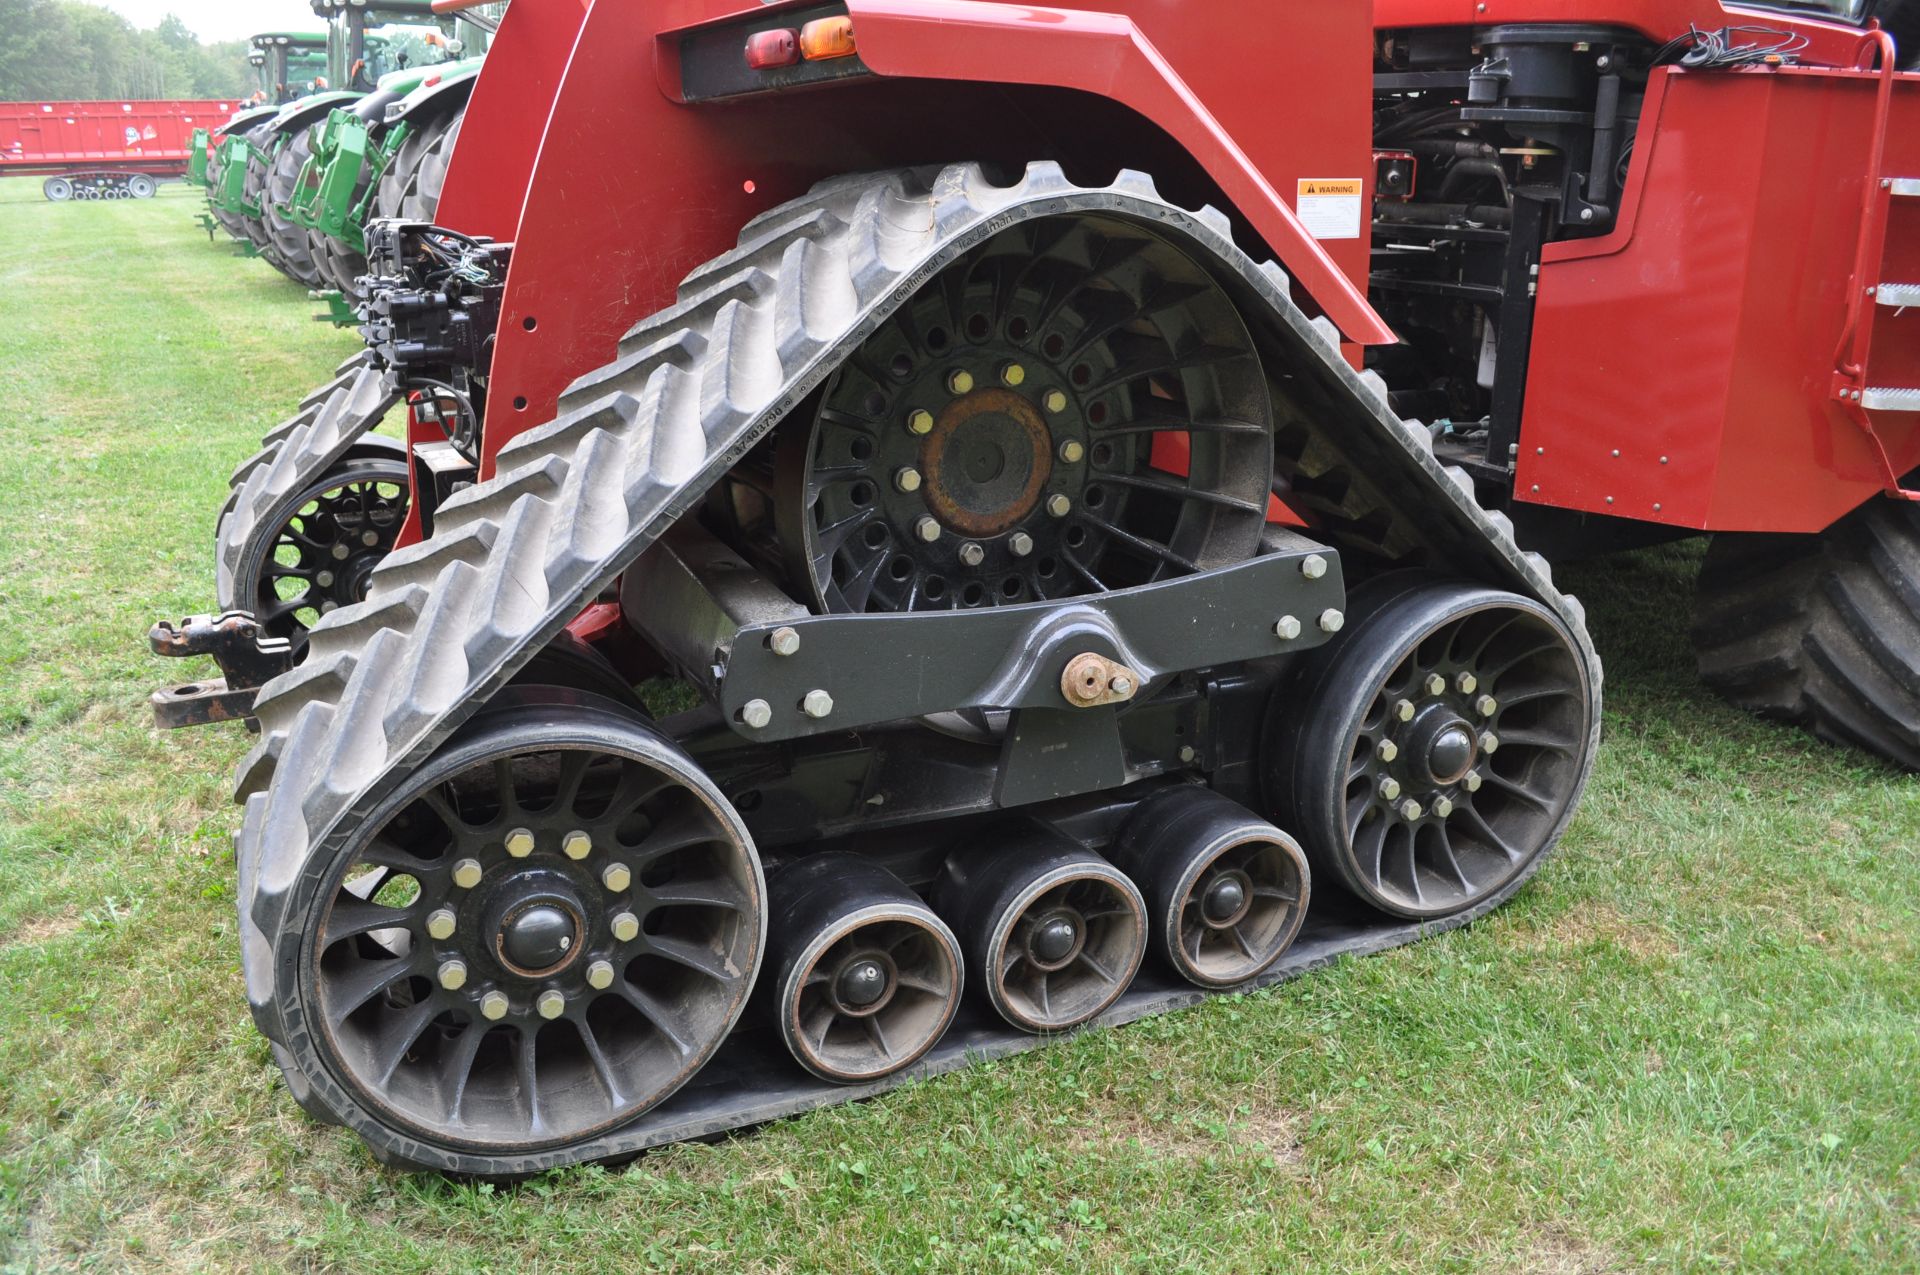 2015 Case IH 540 QuadTrac tractor, powershift, 30” belts, 6 hyd remotes, 1000 PTO, ag drawbar - Image 7 of 35